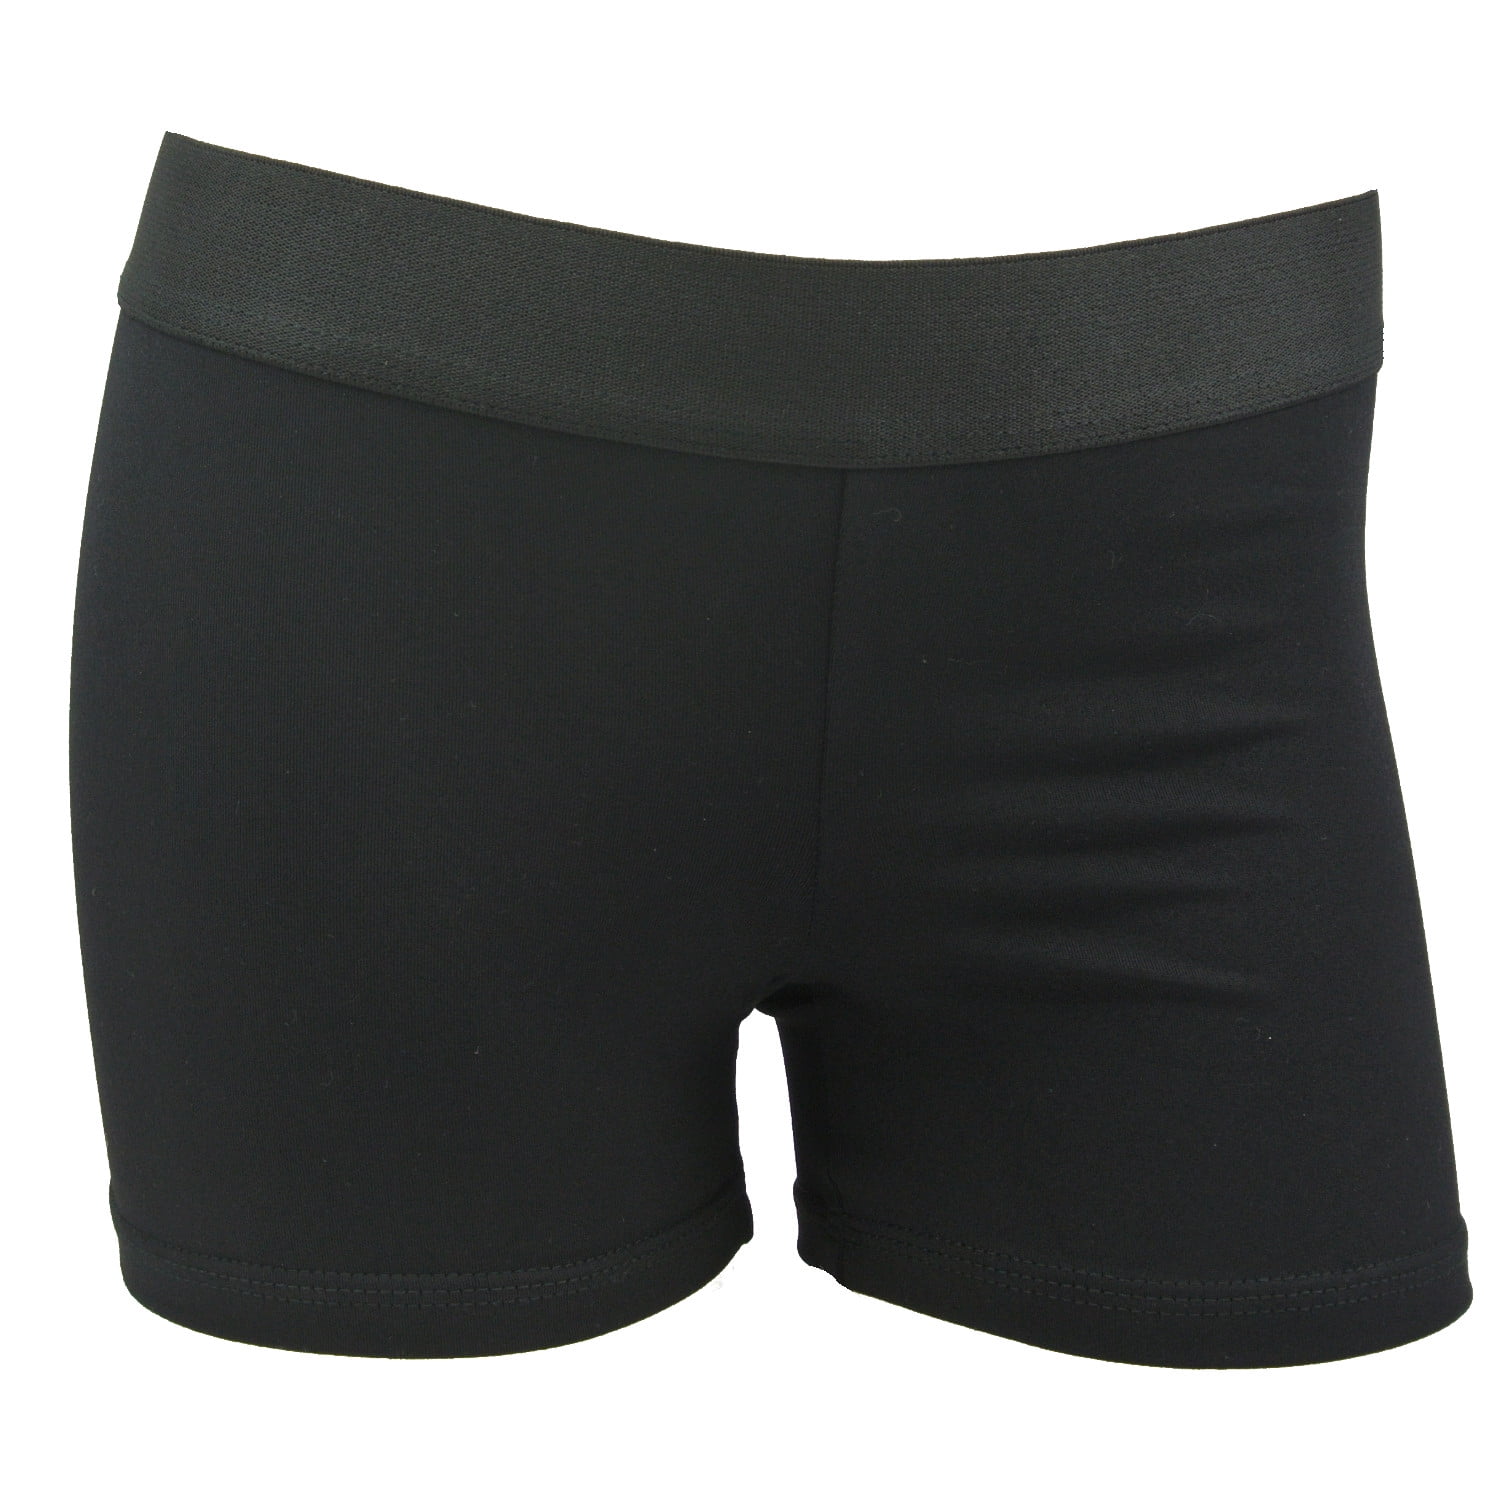 Womens 3 Inch Spandex Compression Shorts (Black, Small)